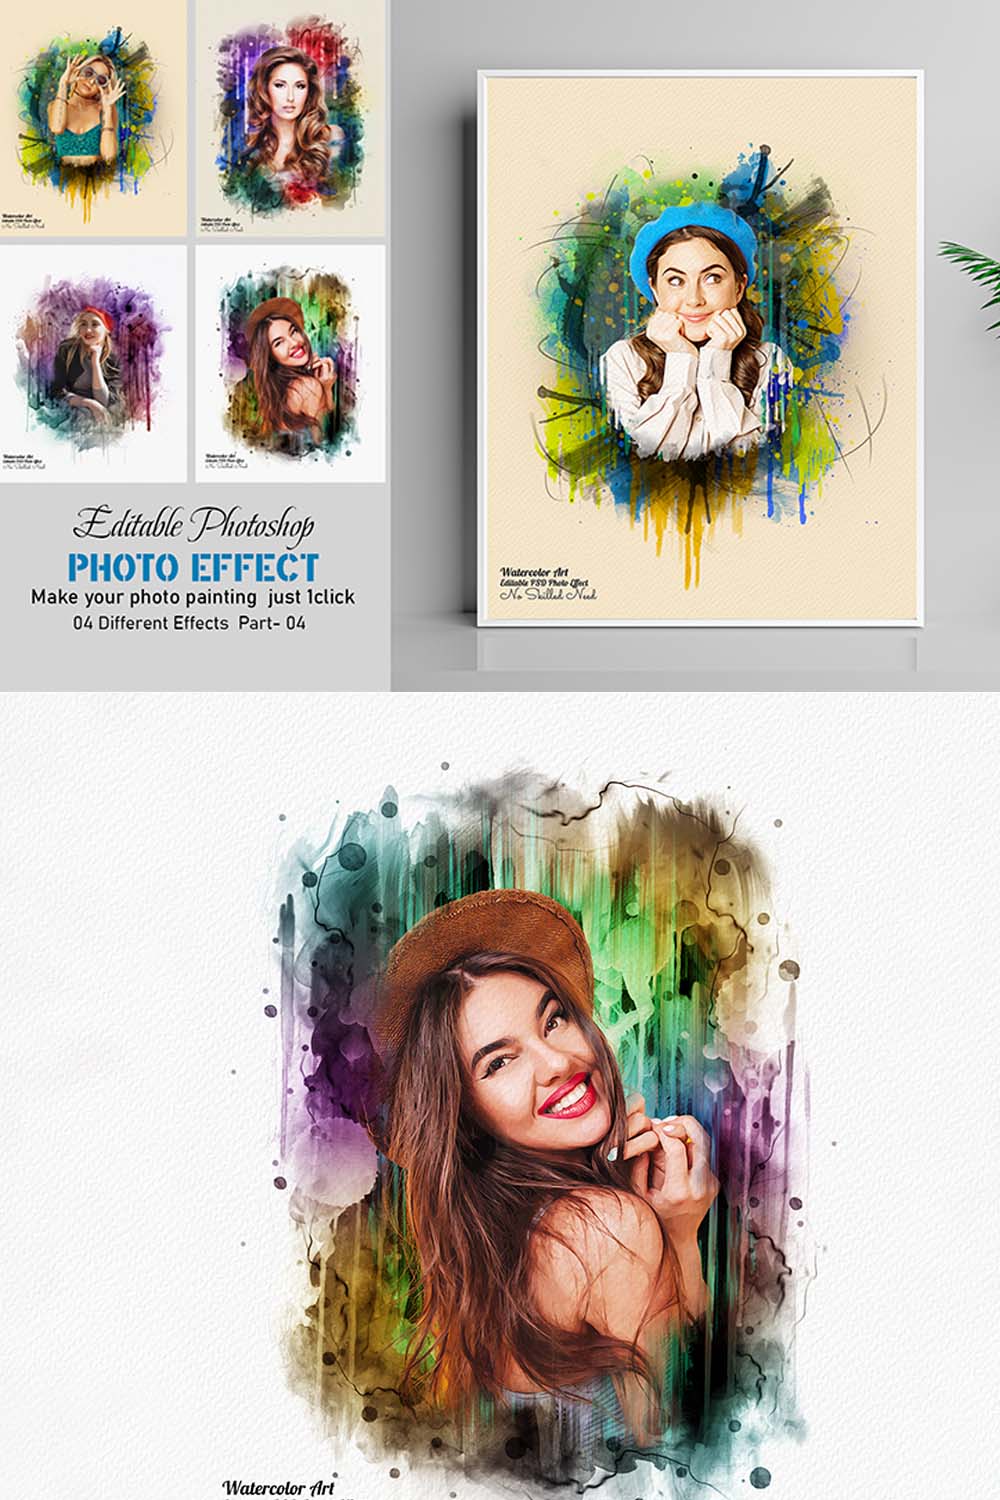 Editable Photoshop Photo Effect pinterest preview image.